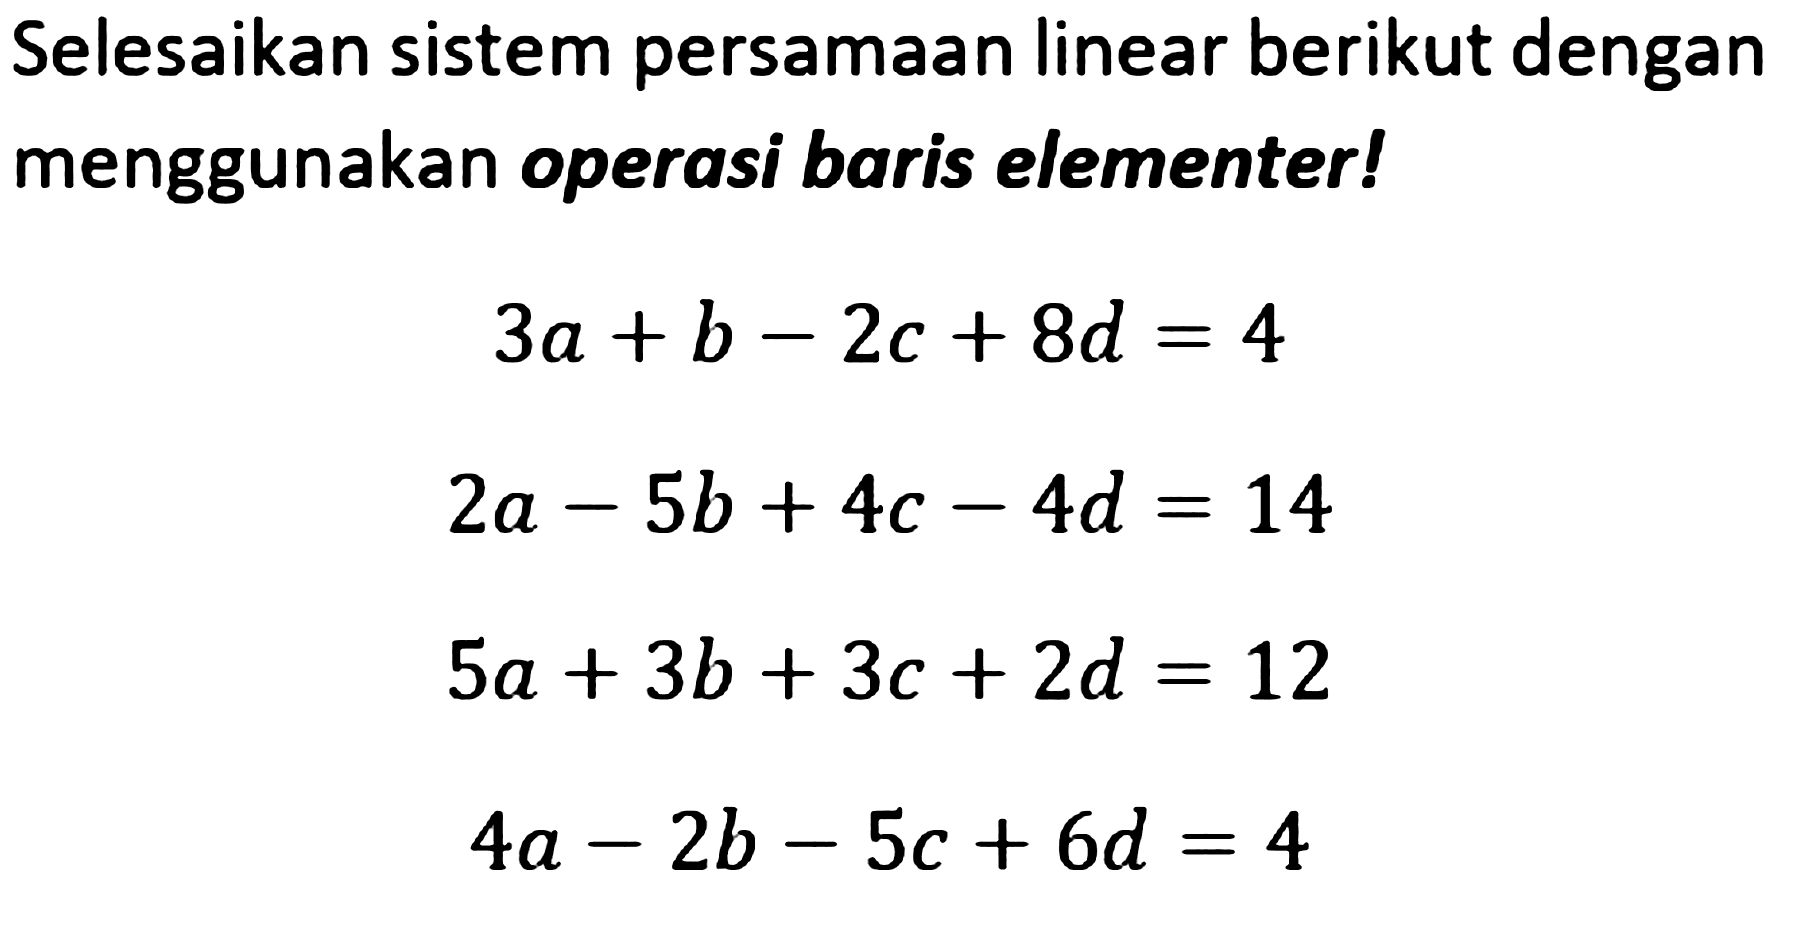 Selesaikan sistem persamaan linear berikut dengan menggunakan operasi baris elementer! 3a+b-2c+8d=4 2a-5b+4c-4d=14 5a+3b+3c+2d=12 4a-2b-5c+6d=4